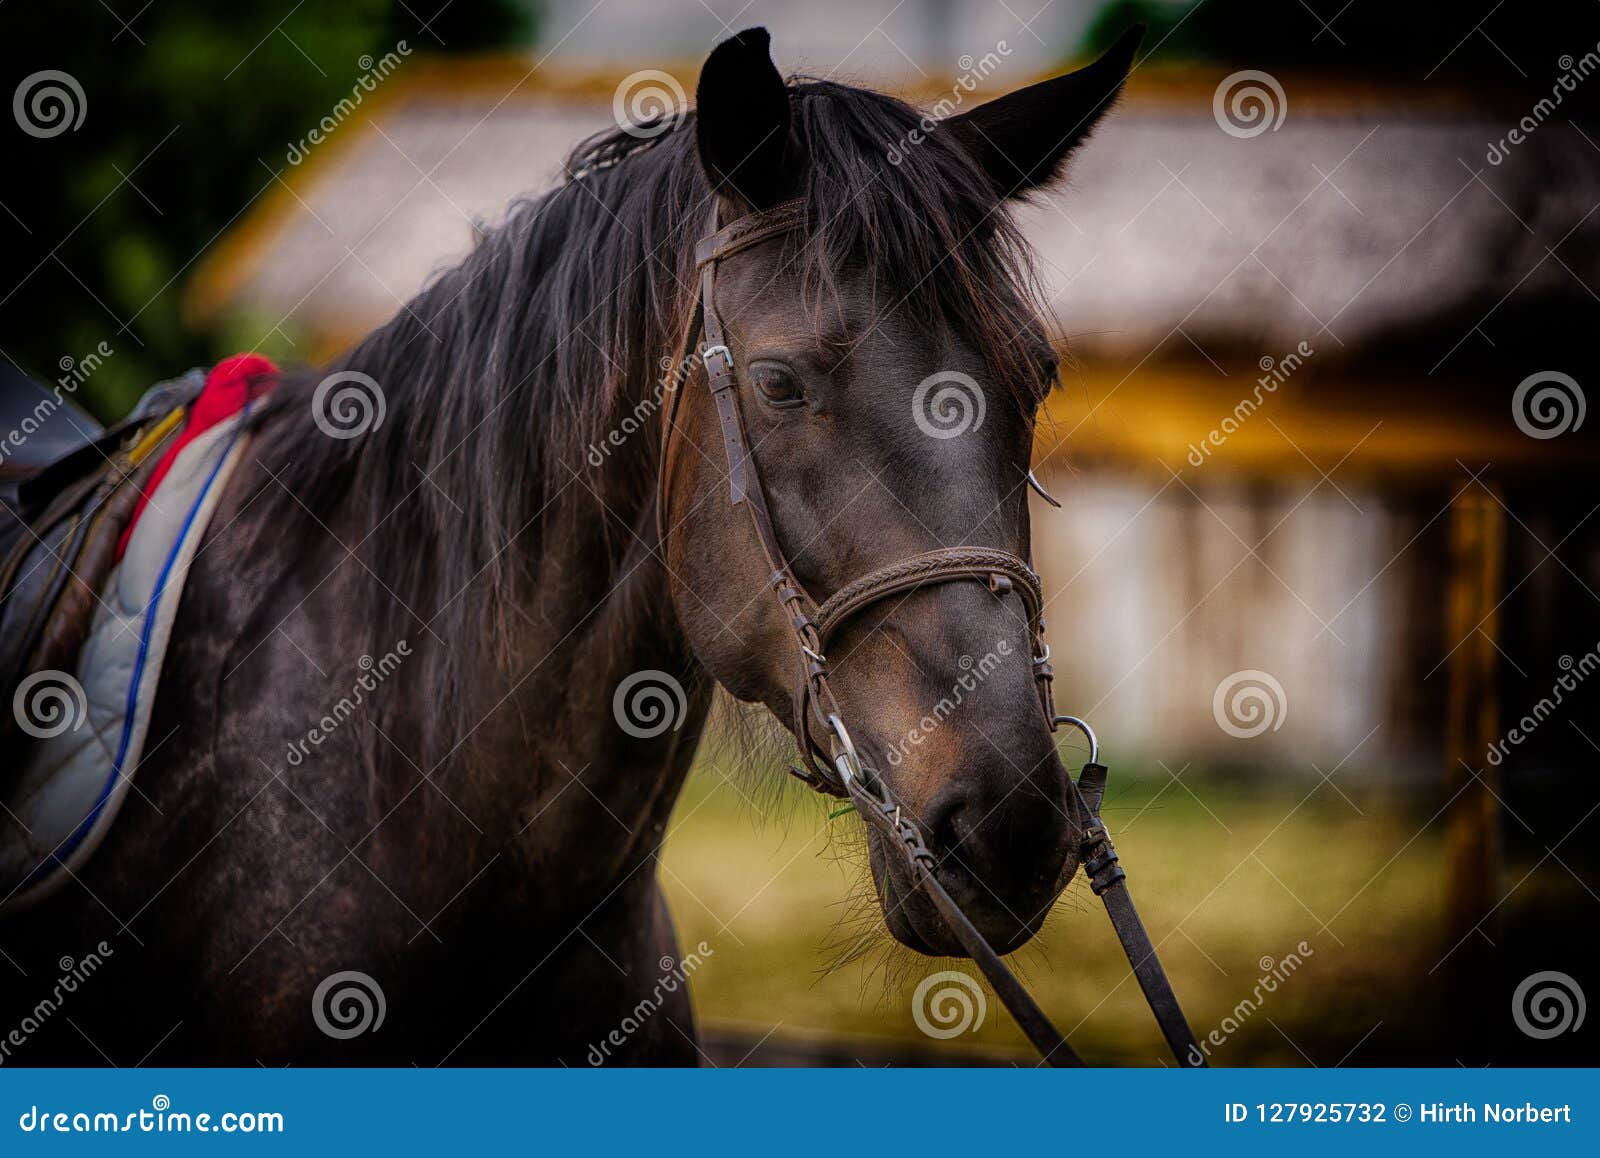 black horse steed stallion